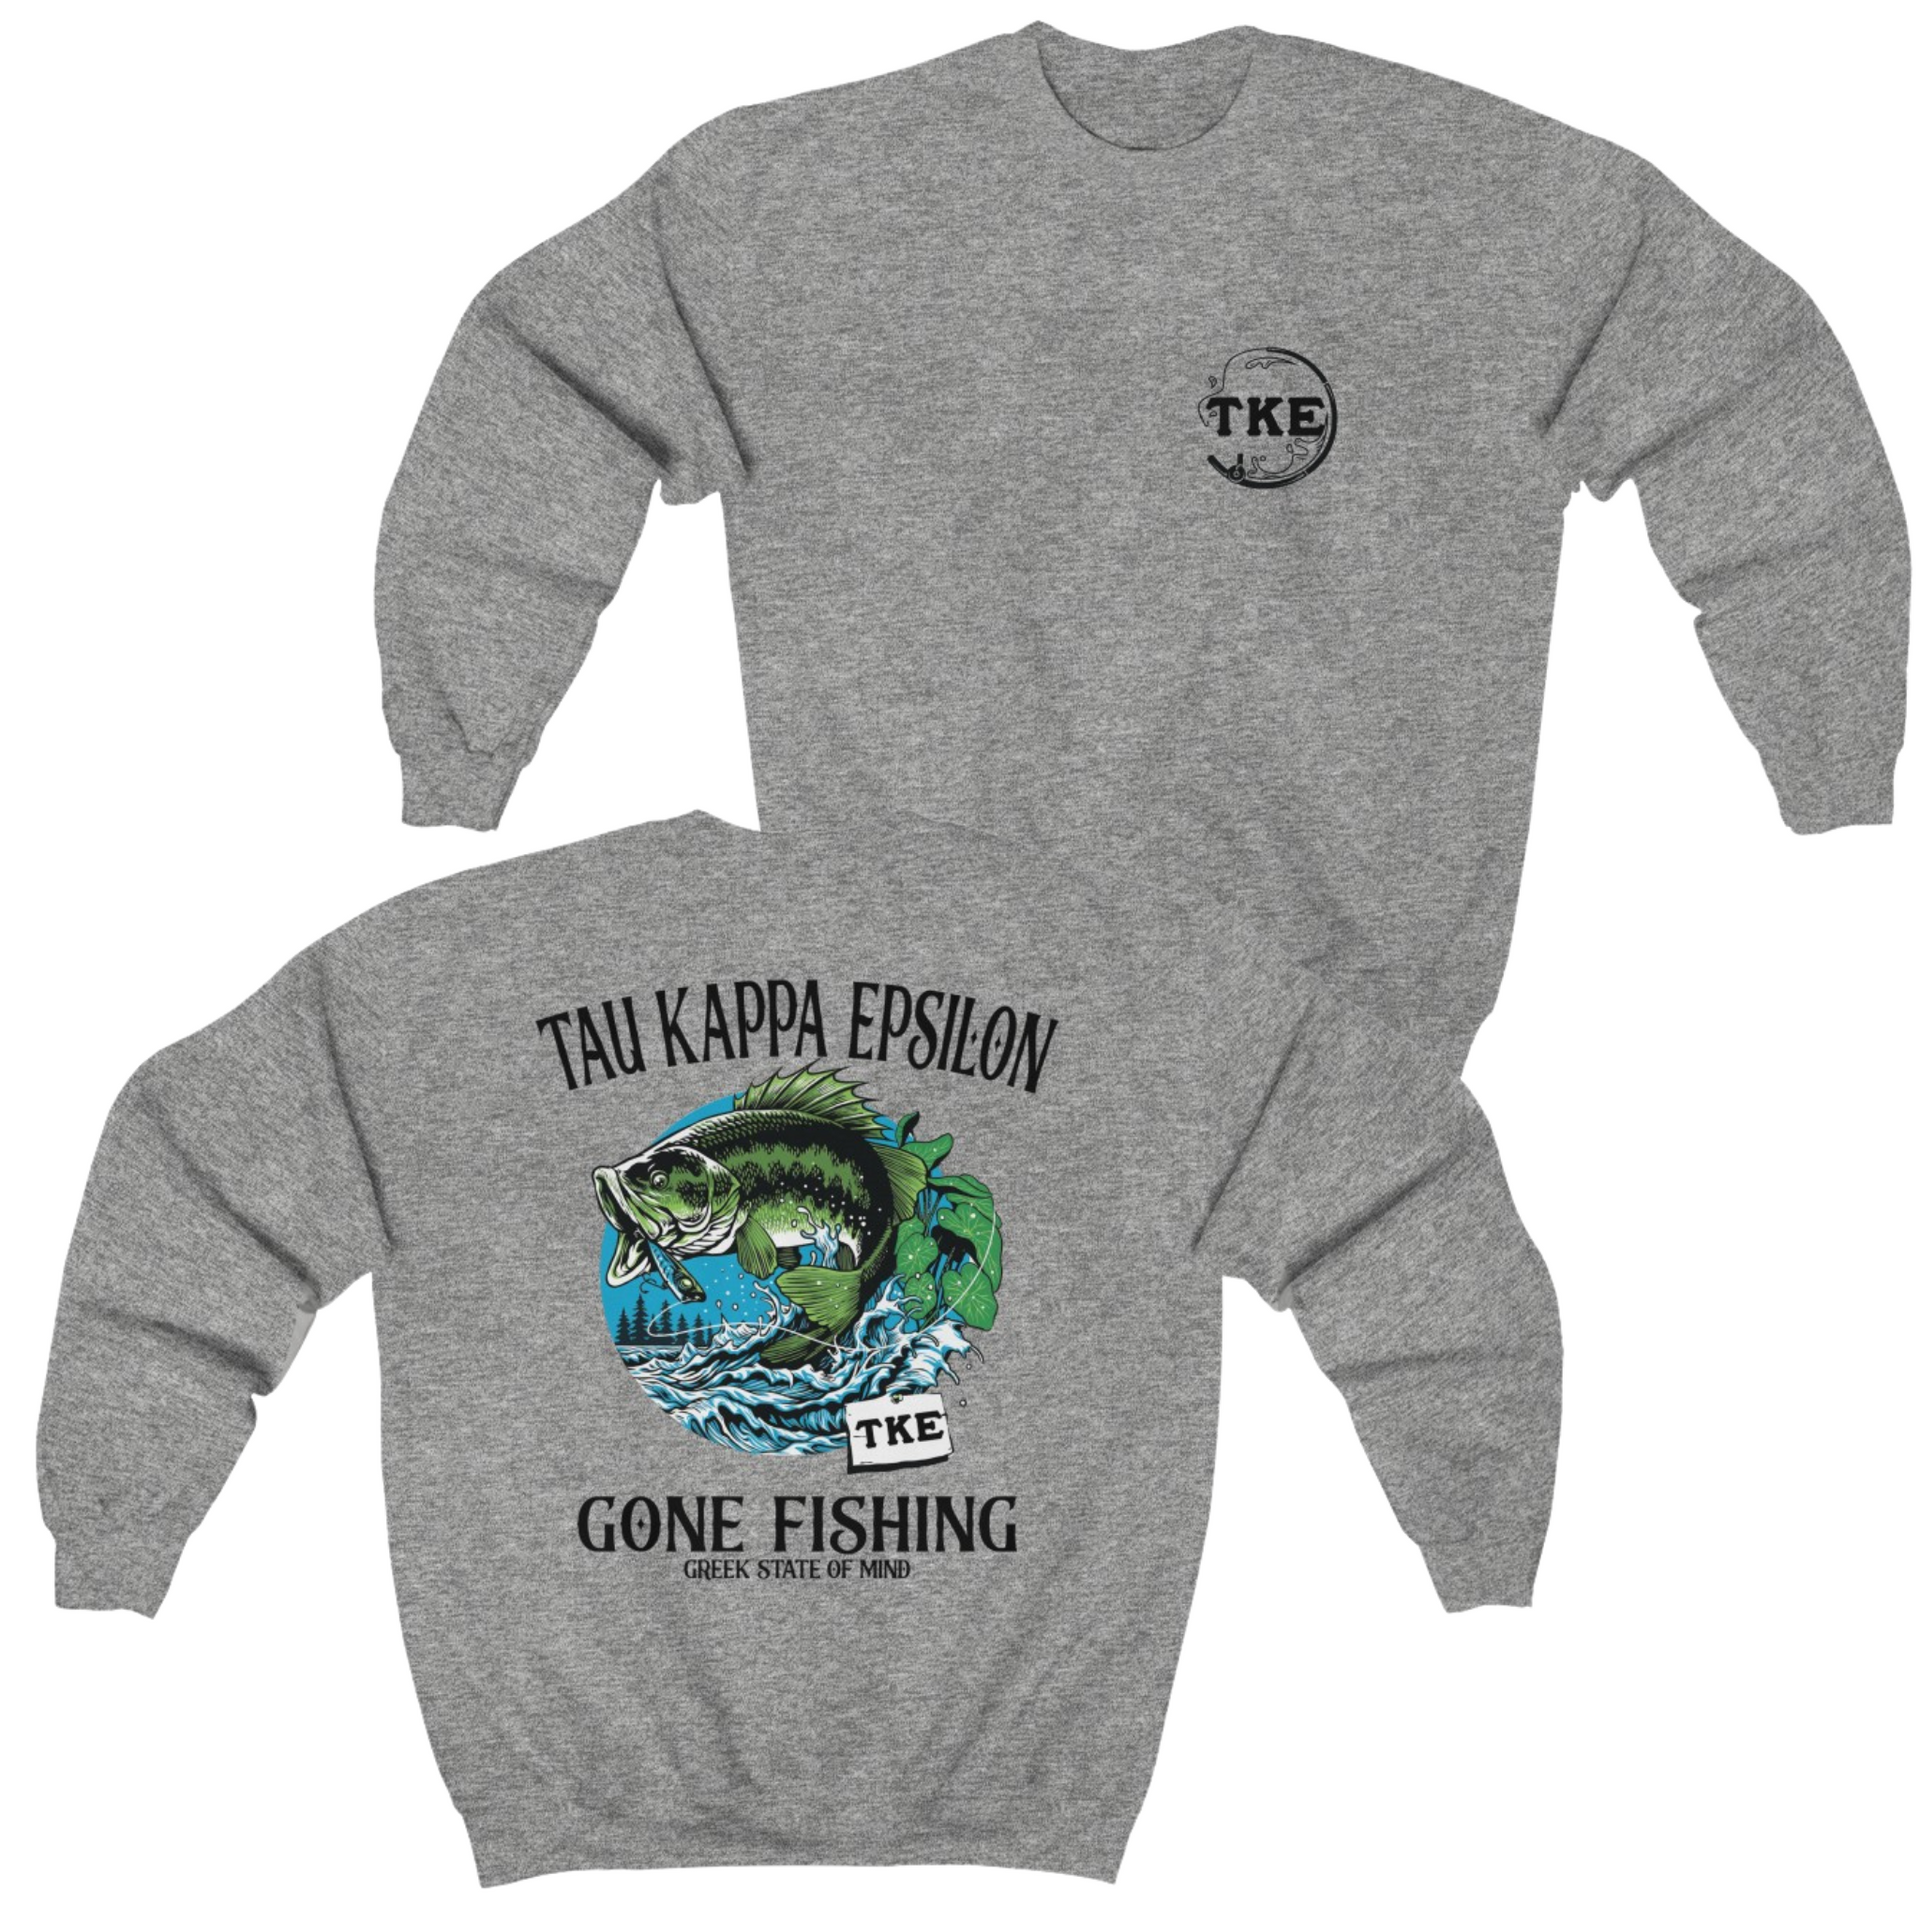 Grey Tau Kappa Epsilon Graphic Crewneck Sweatshirt | Gone Fishing | TKE Clothing and Merchandise 